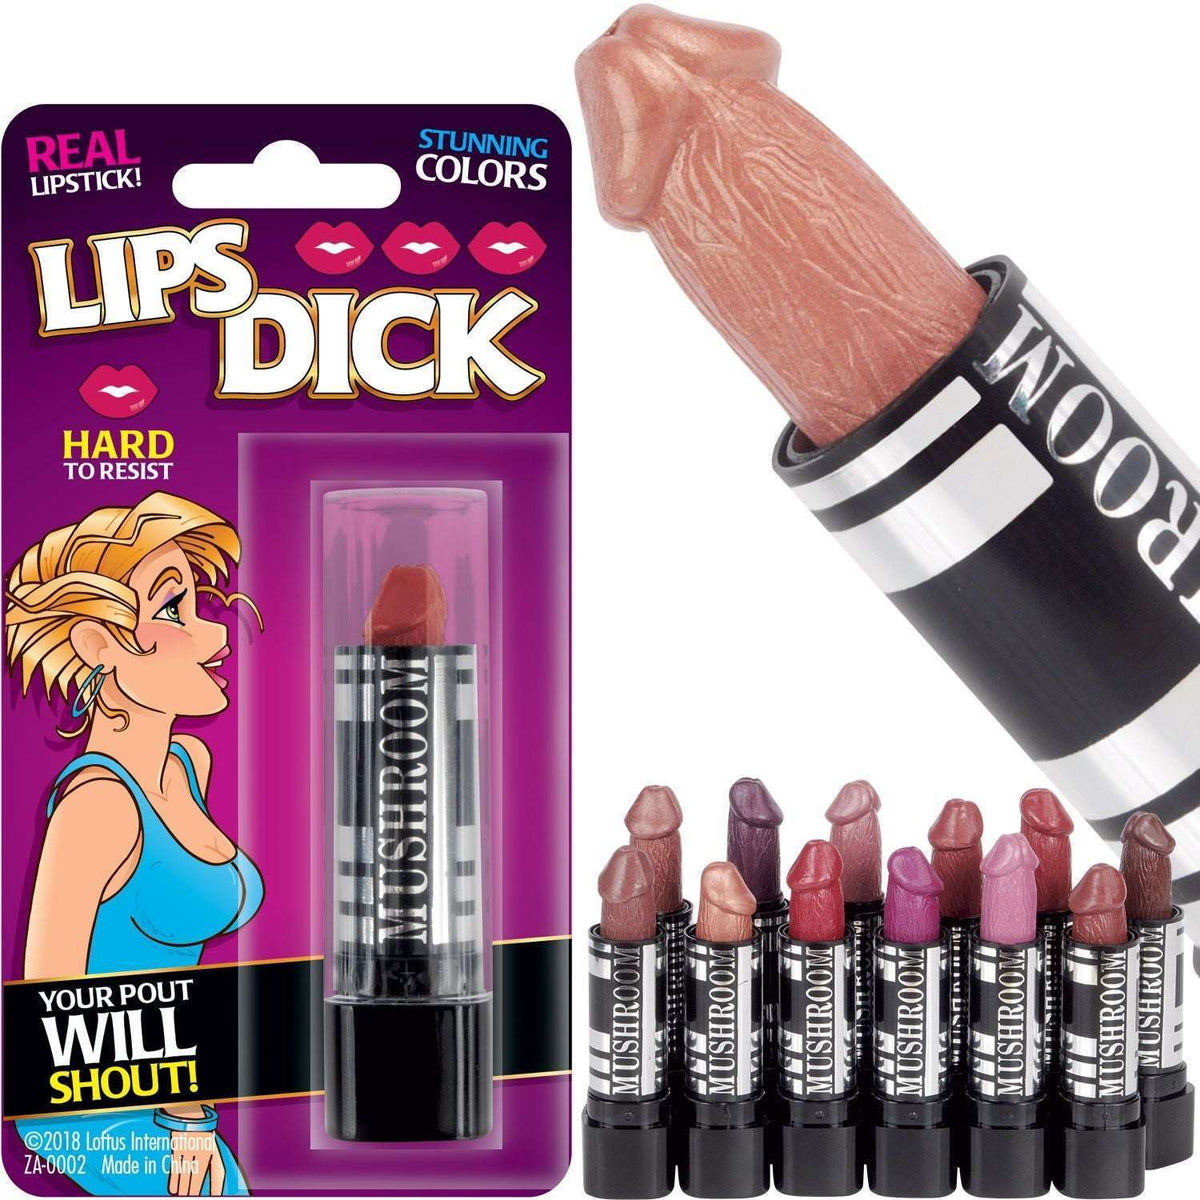 Lips Dick Funny Lipstick